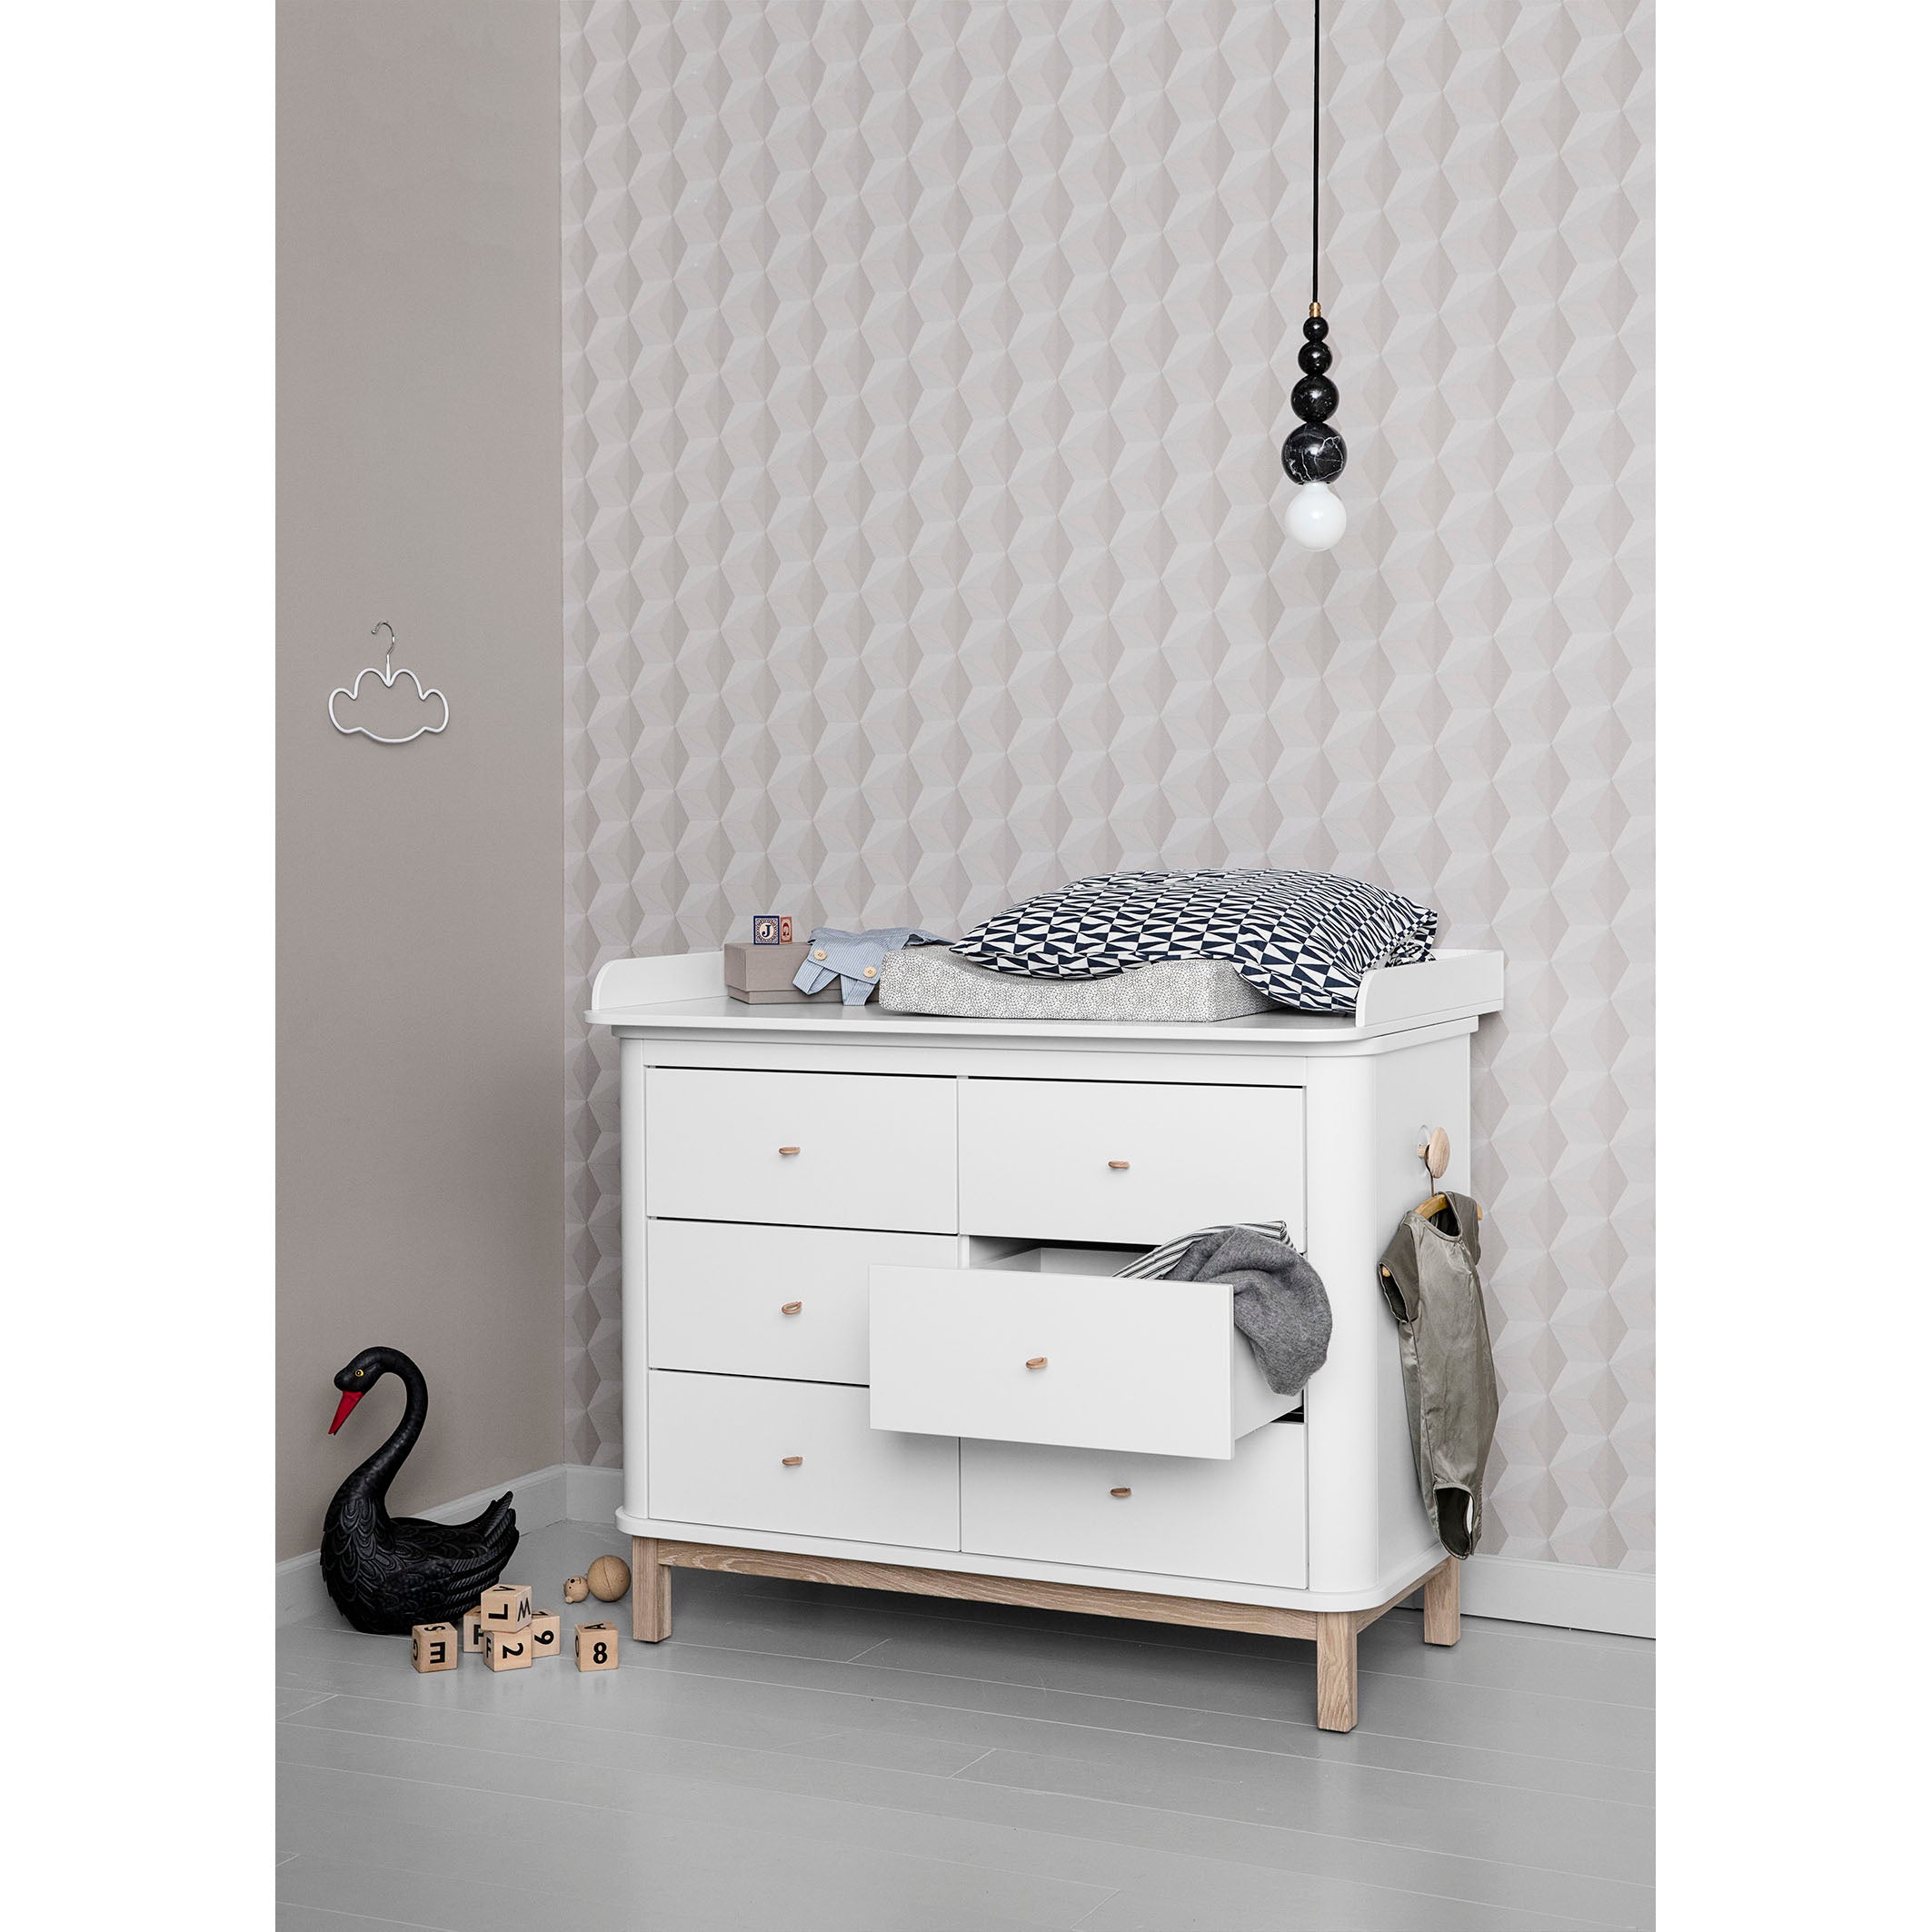 oliver-furniture-wood-nursery-plate-large-white-for-dresser-6-drawers- (7)